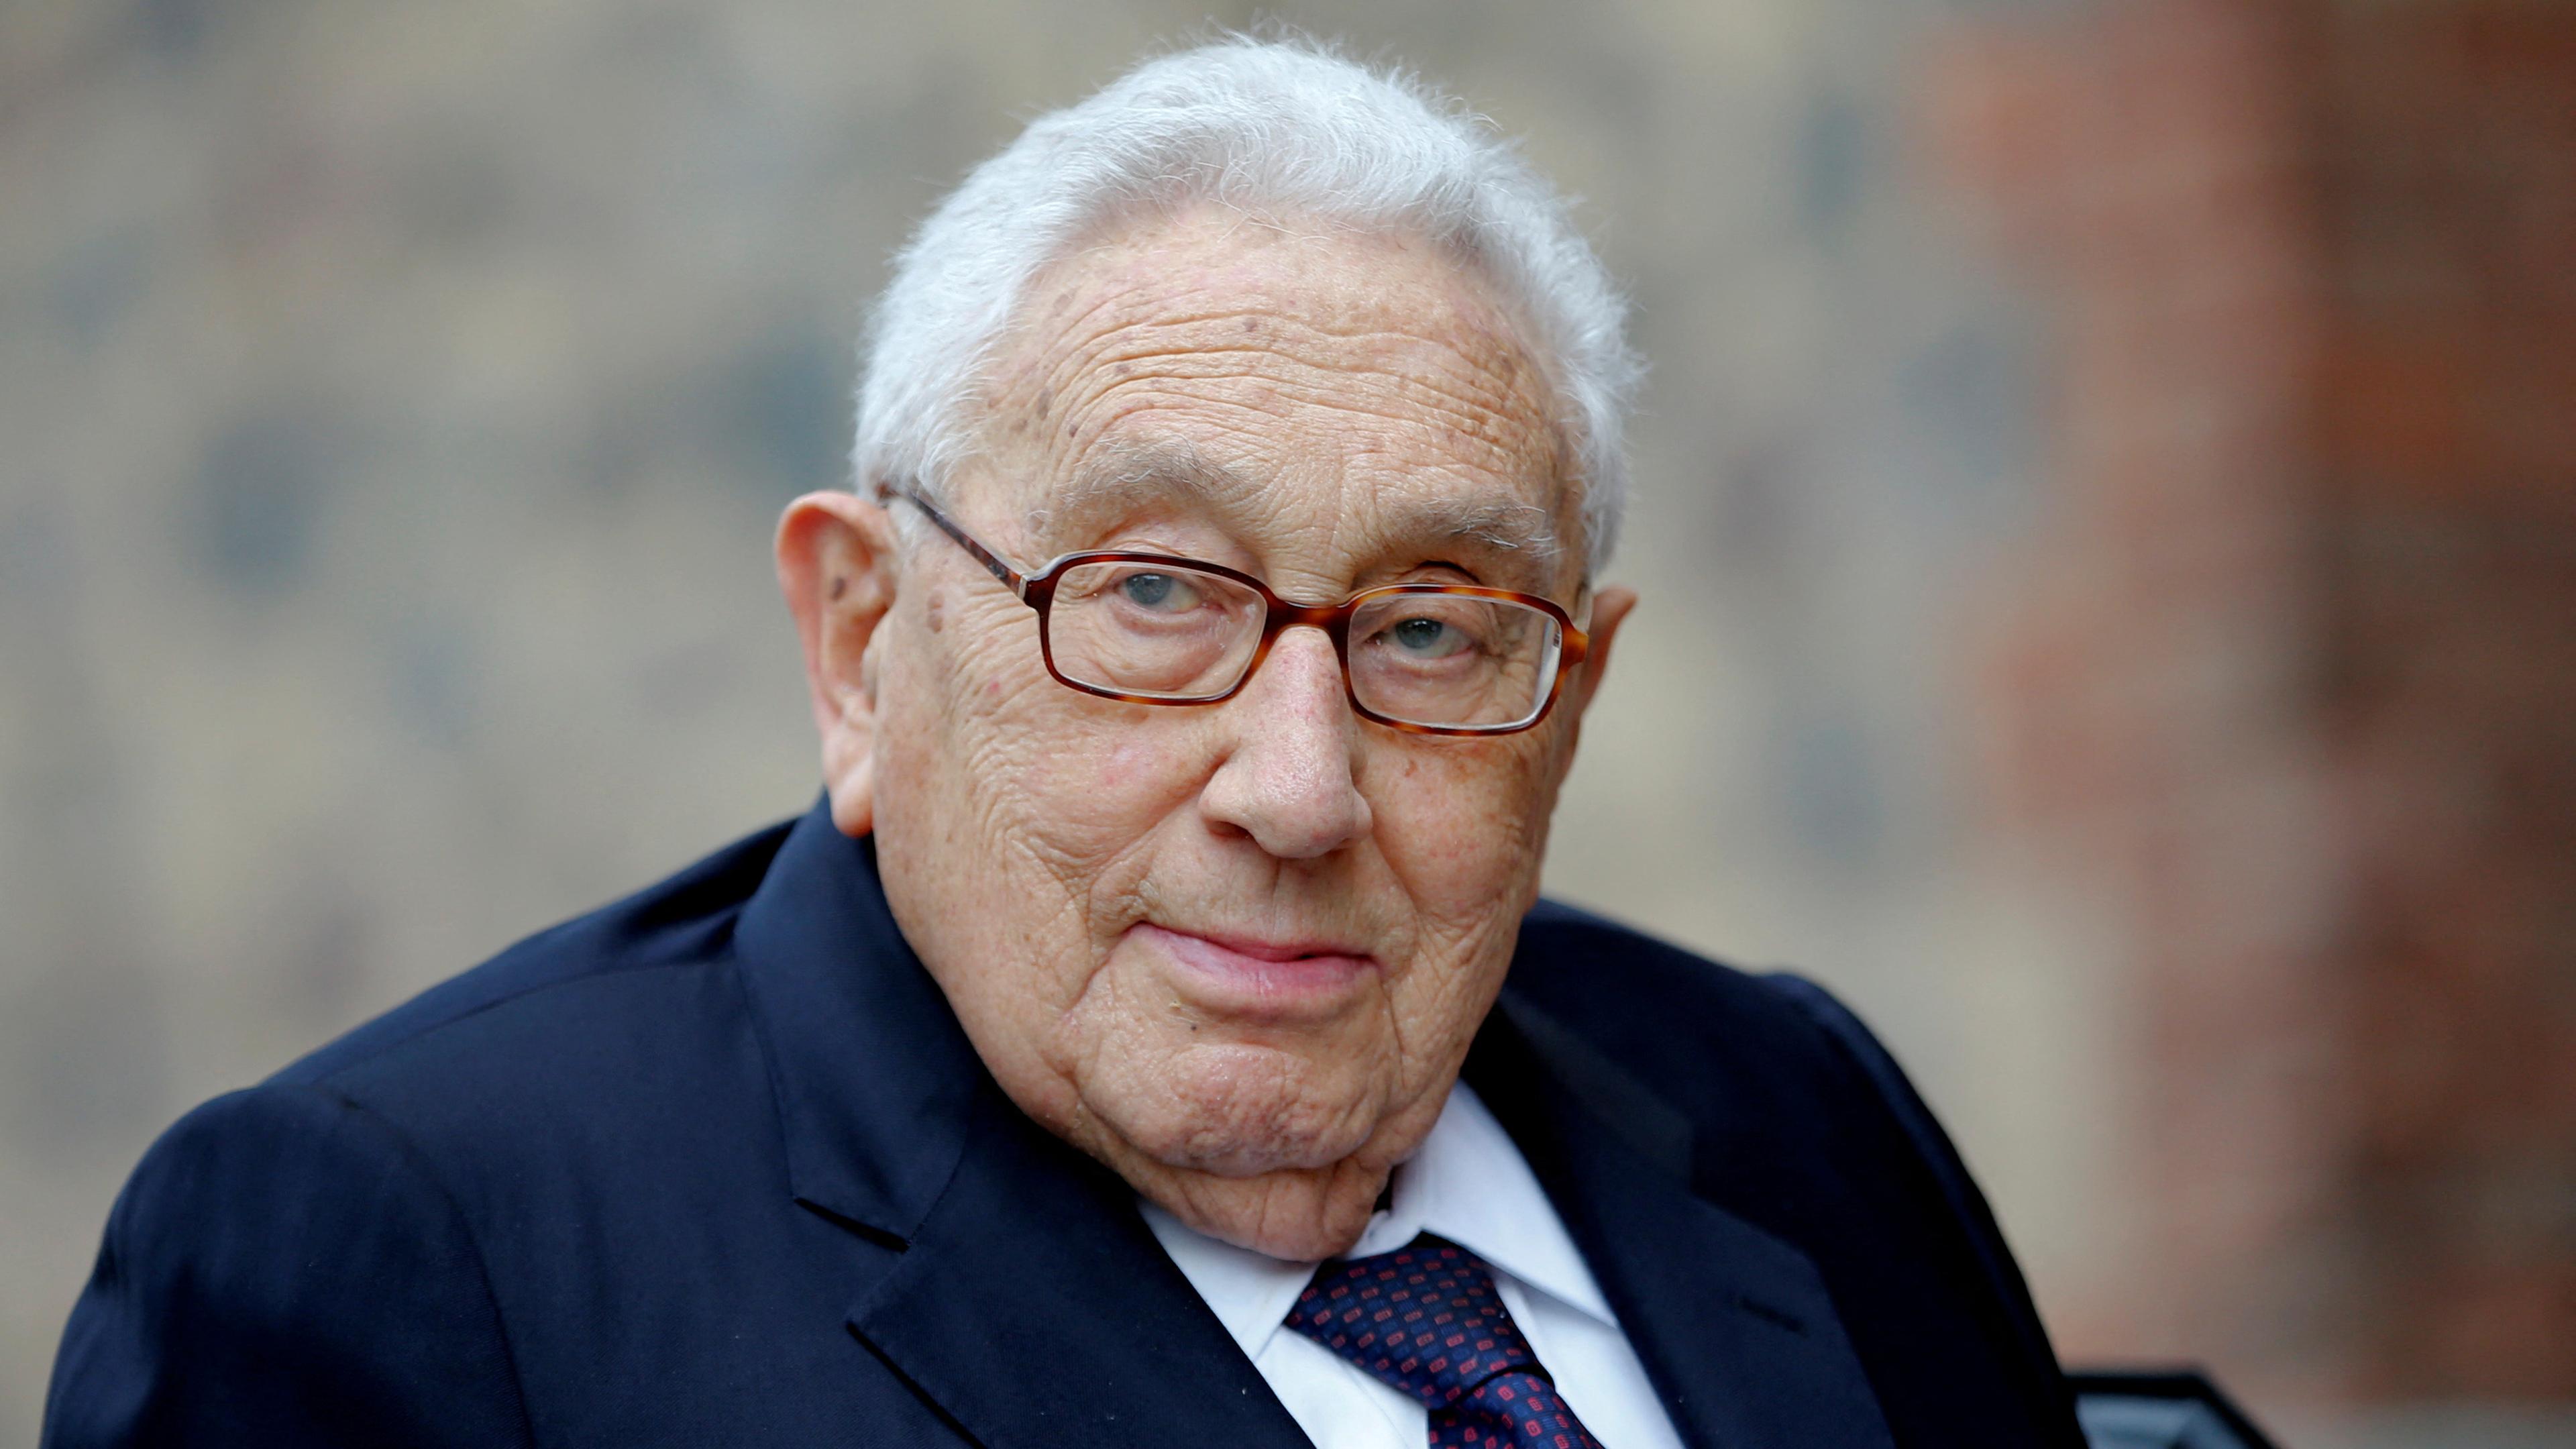 Former U.S. Secretary of State Henry Kissinger arrives for a memorial service for late Social Democratic senior politician Egon Bahr at St. Mary's Church in Berlin, Germany, September 17, 2015.